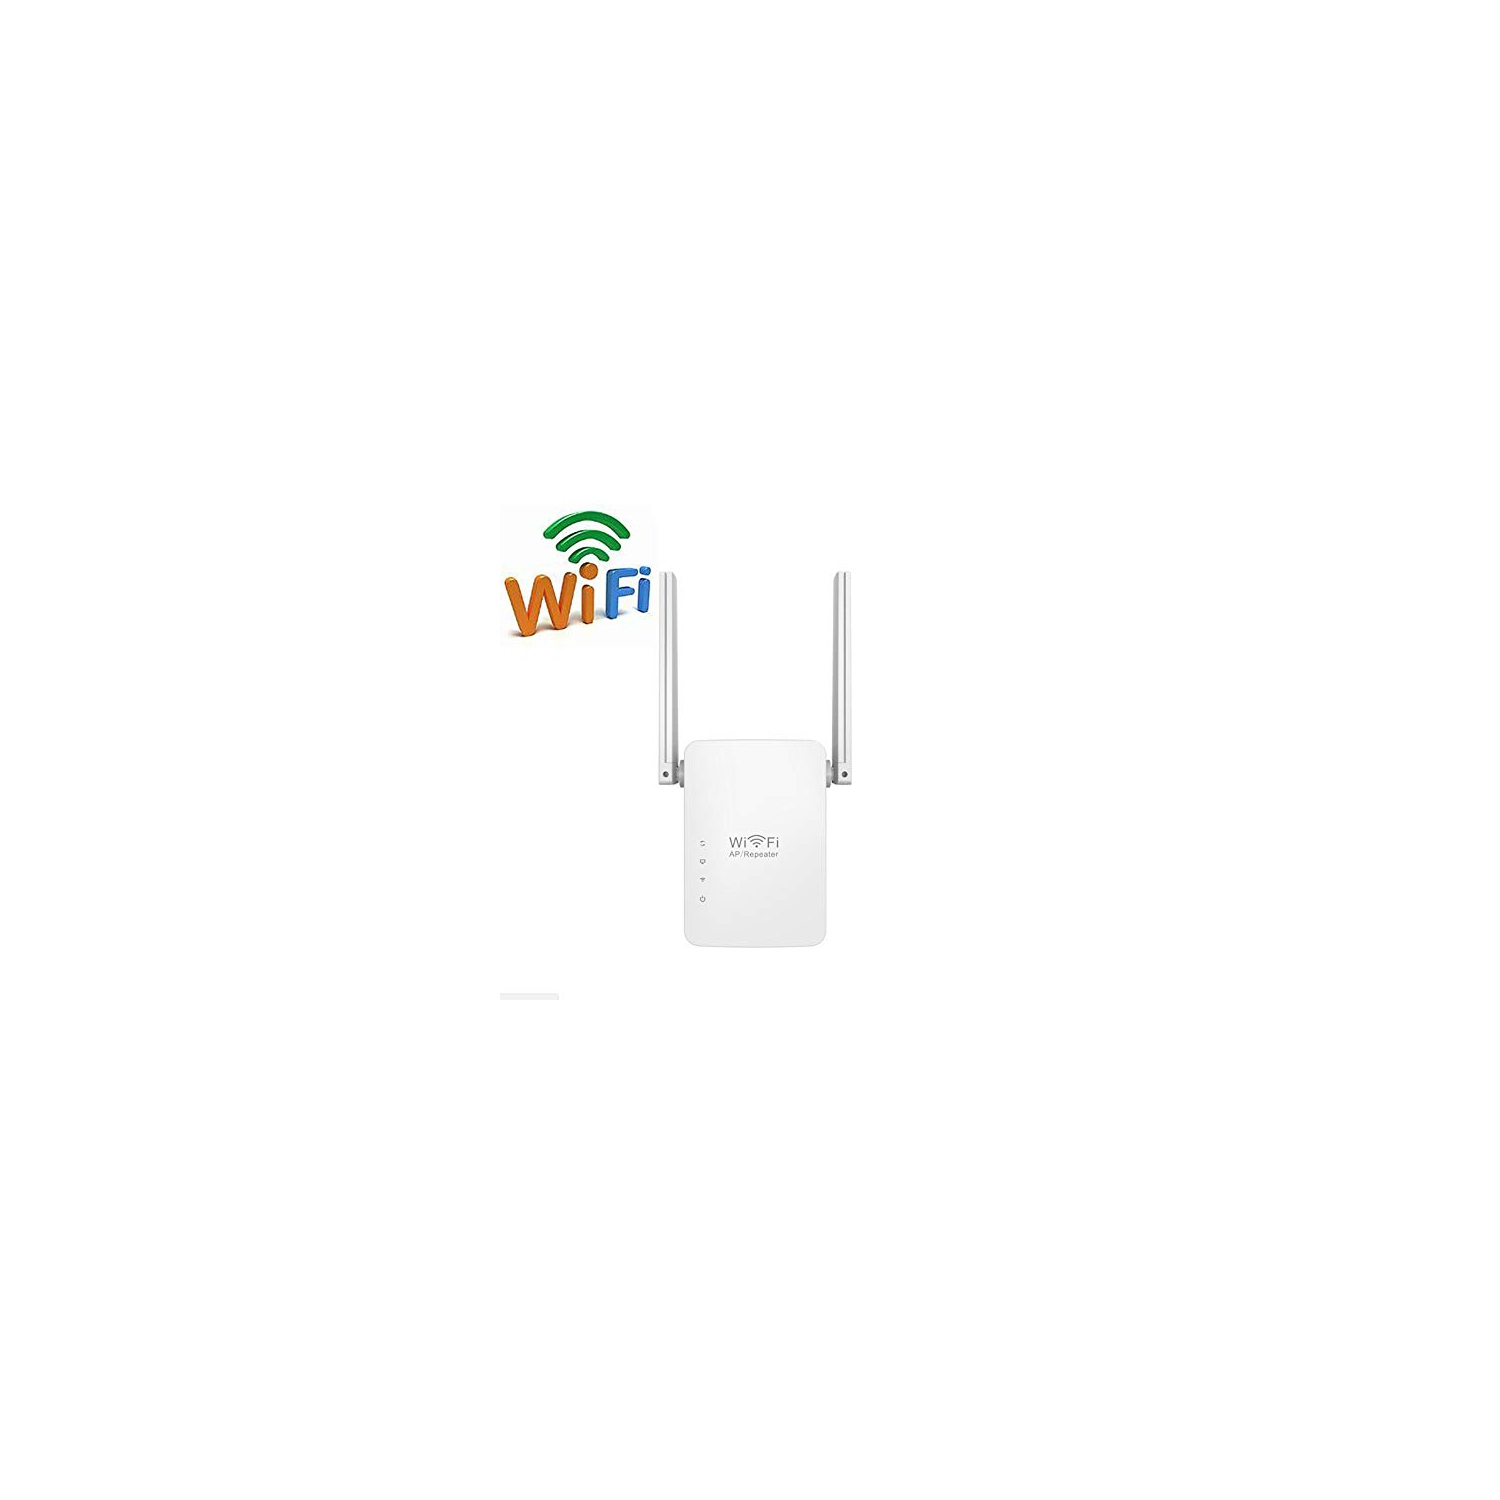 WiFi Extender WiFi Repeater Wireless Signal Booster WiFi Range Extender 300Mbps 2.4GHz Signal Internet Extender